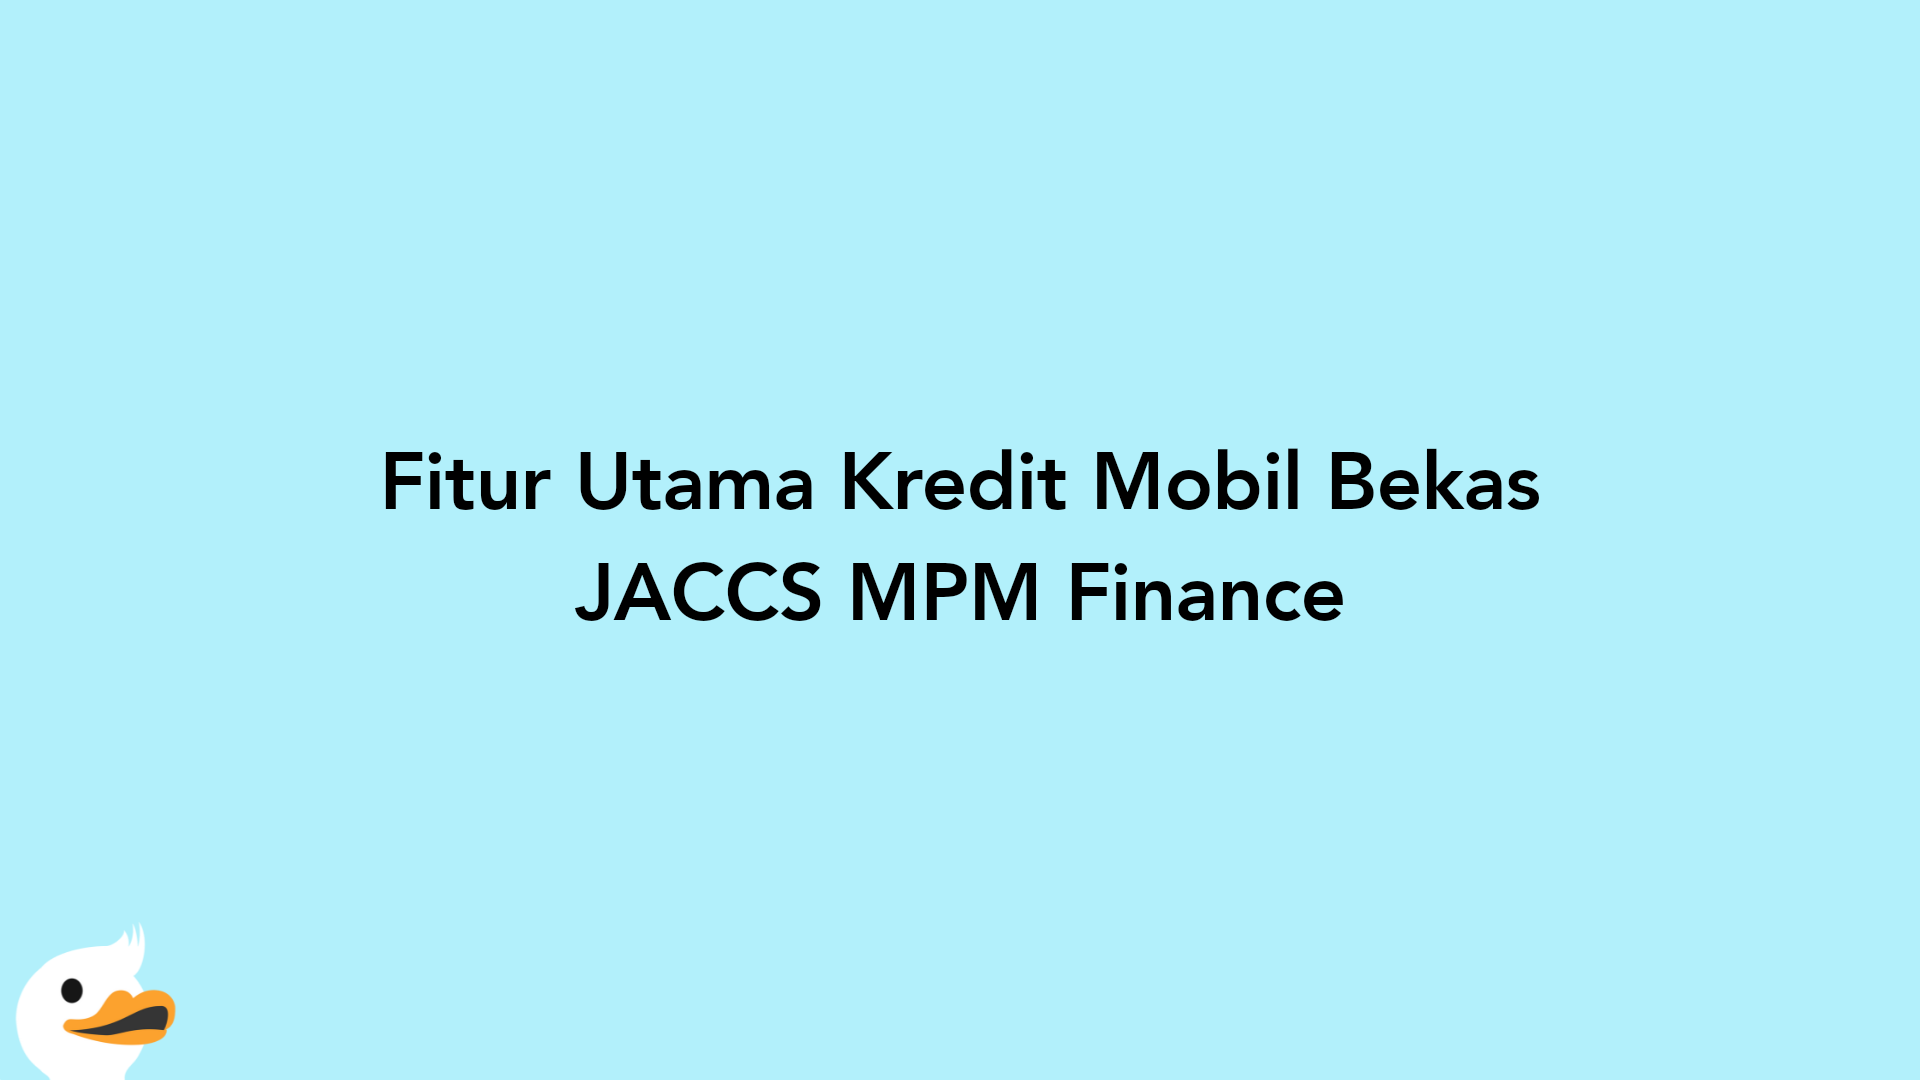 Fitur Utama Kredit Mobil Bekas JACCS MPM Finance